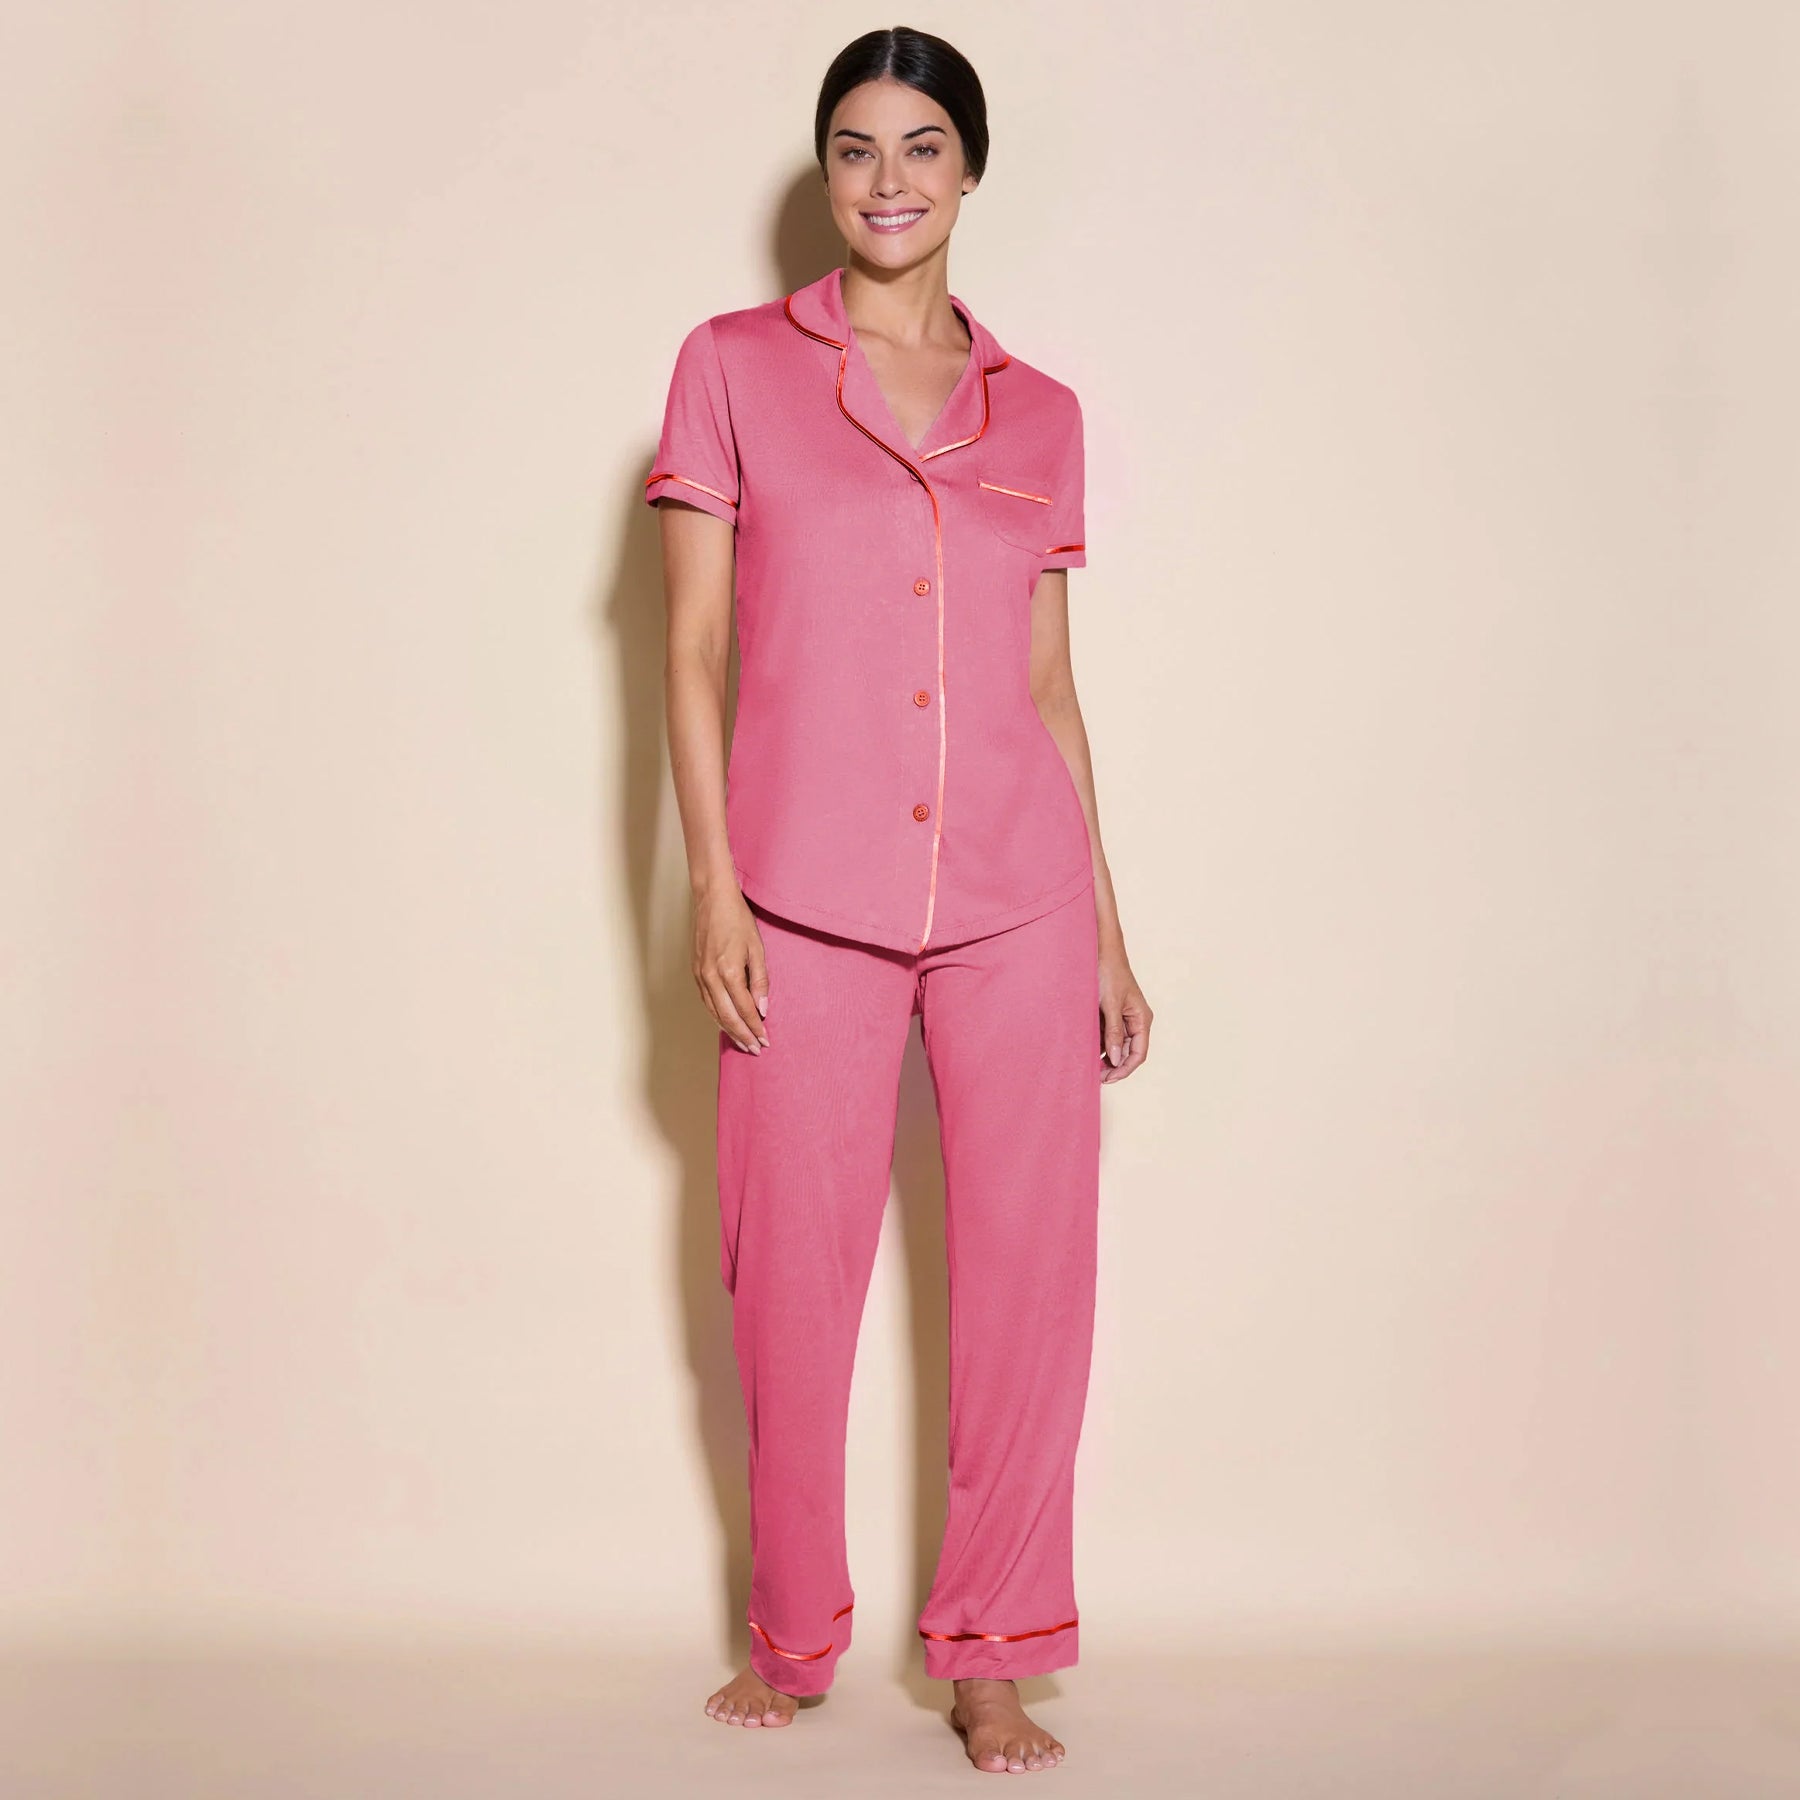 Satin Top & Capri Sleepwear Set for Girls, Lingerie, Pajama Sleepwear Free  Delivery India.